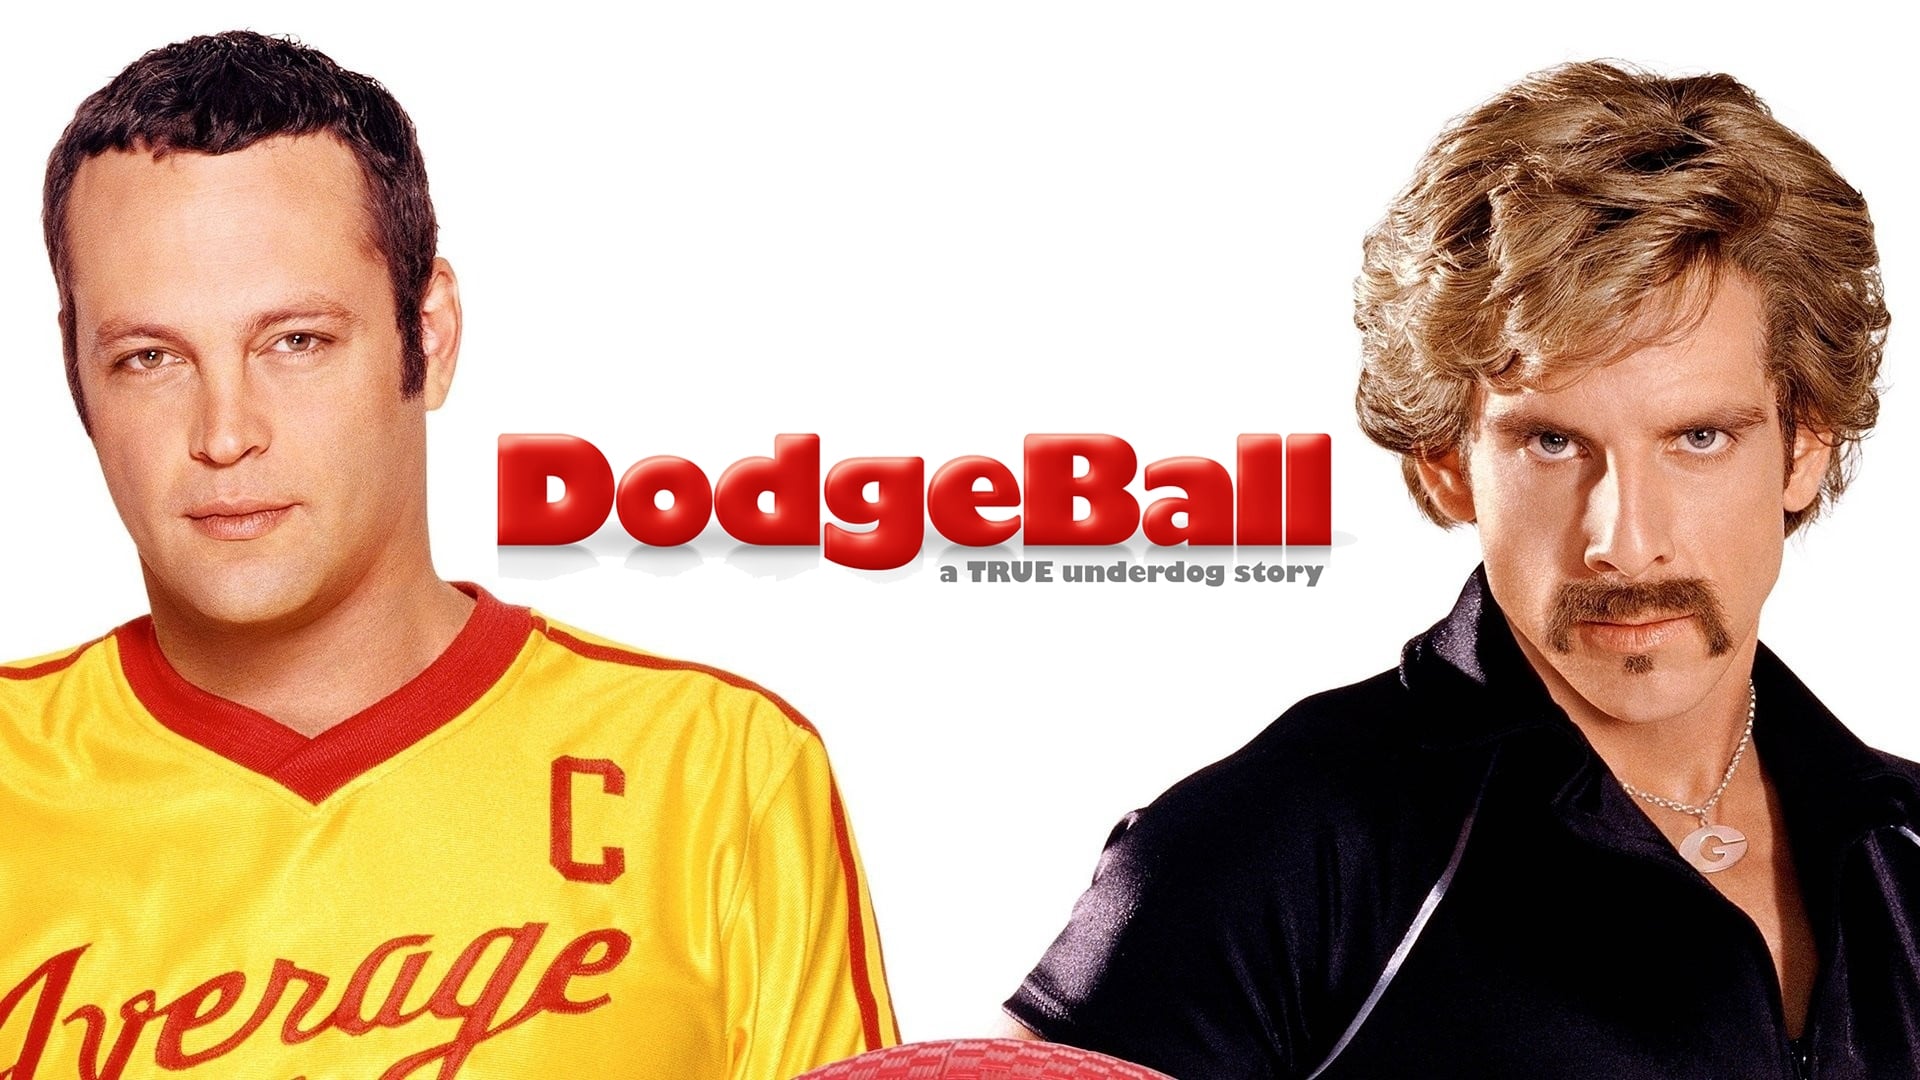 DodgeBall (2004)